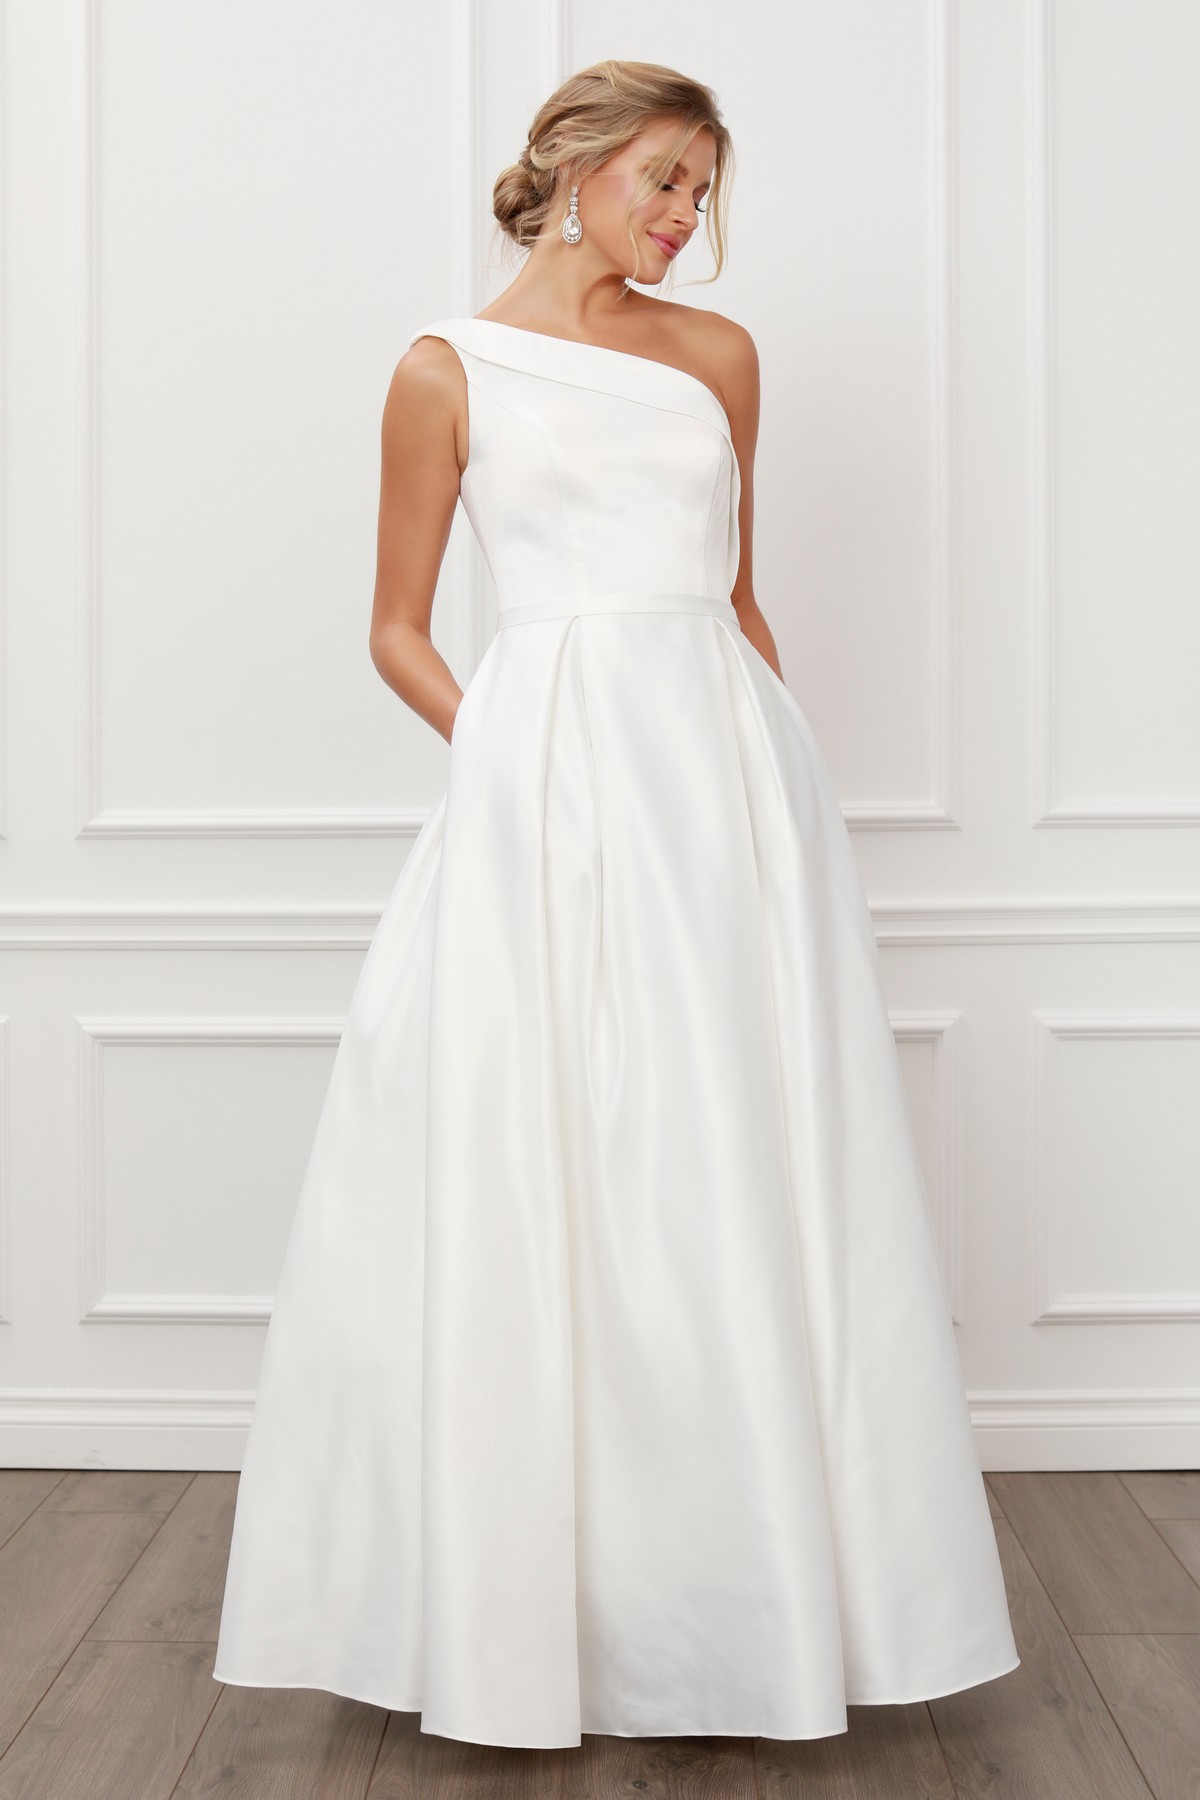 Wedding Dresses Australia | Bridal Gowns Australia | A964